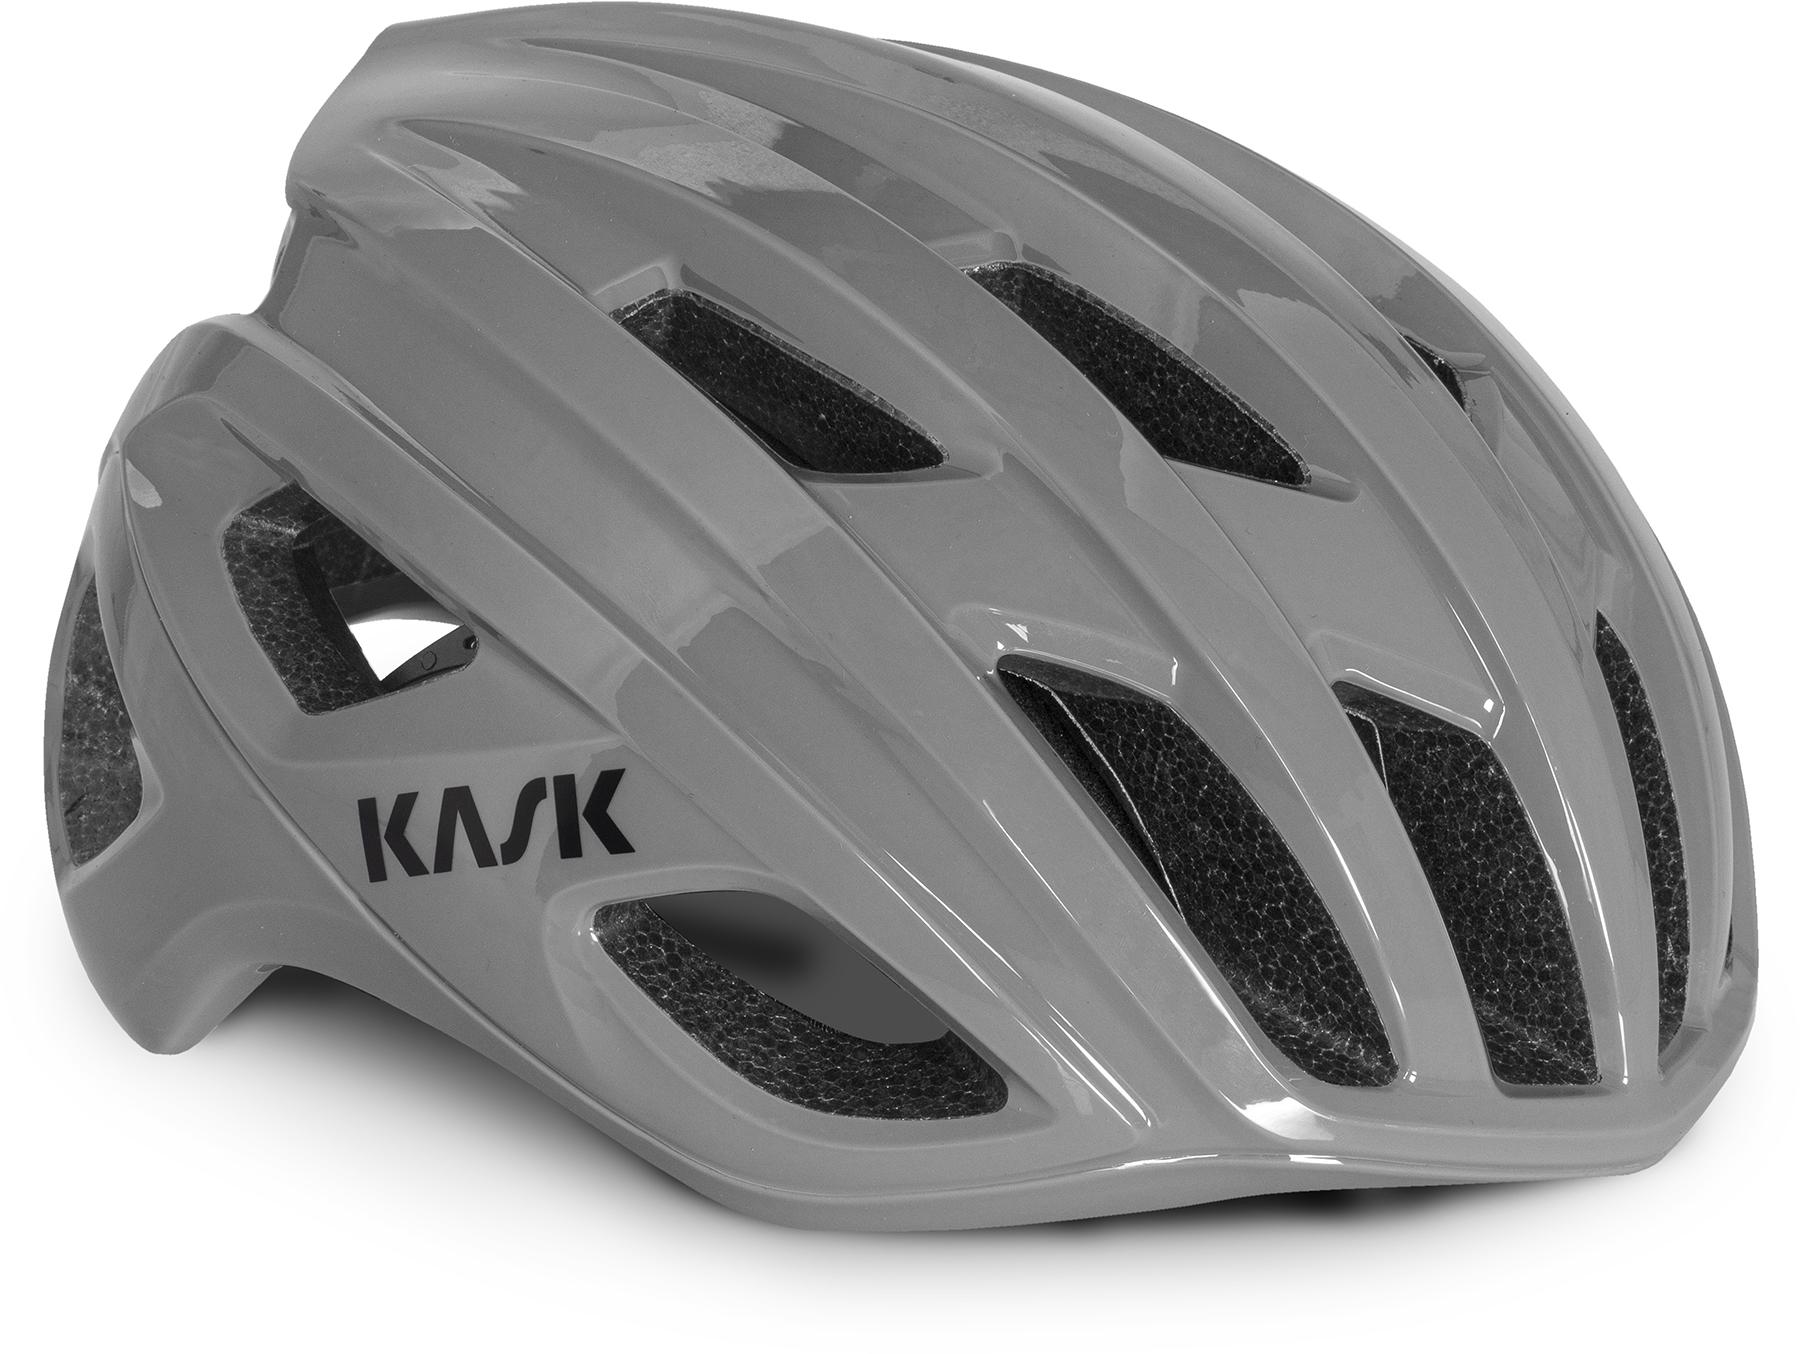 Kask Mojito3 Road Cycling Helmet (wg11) - Grey